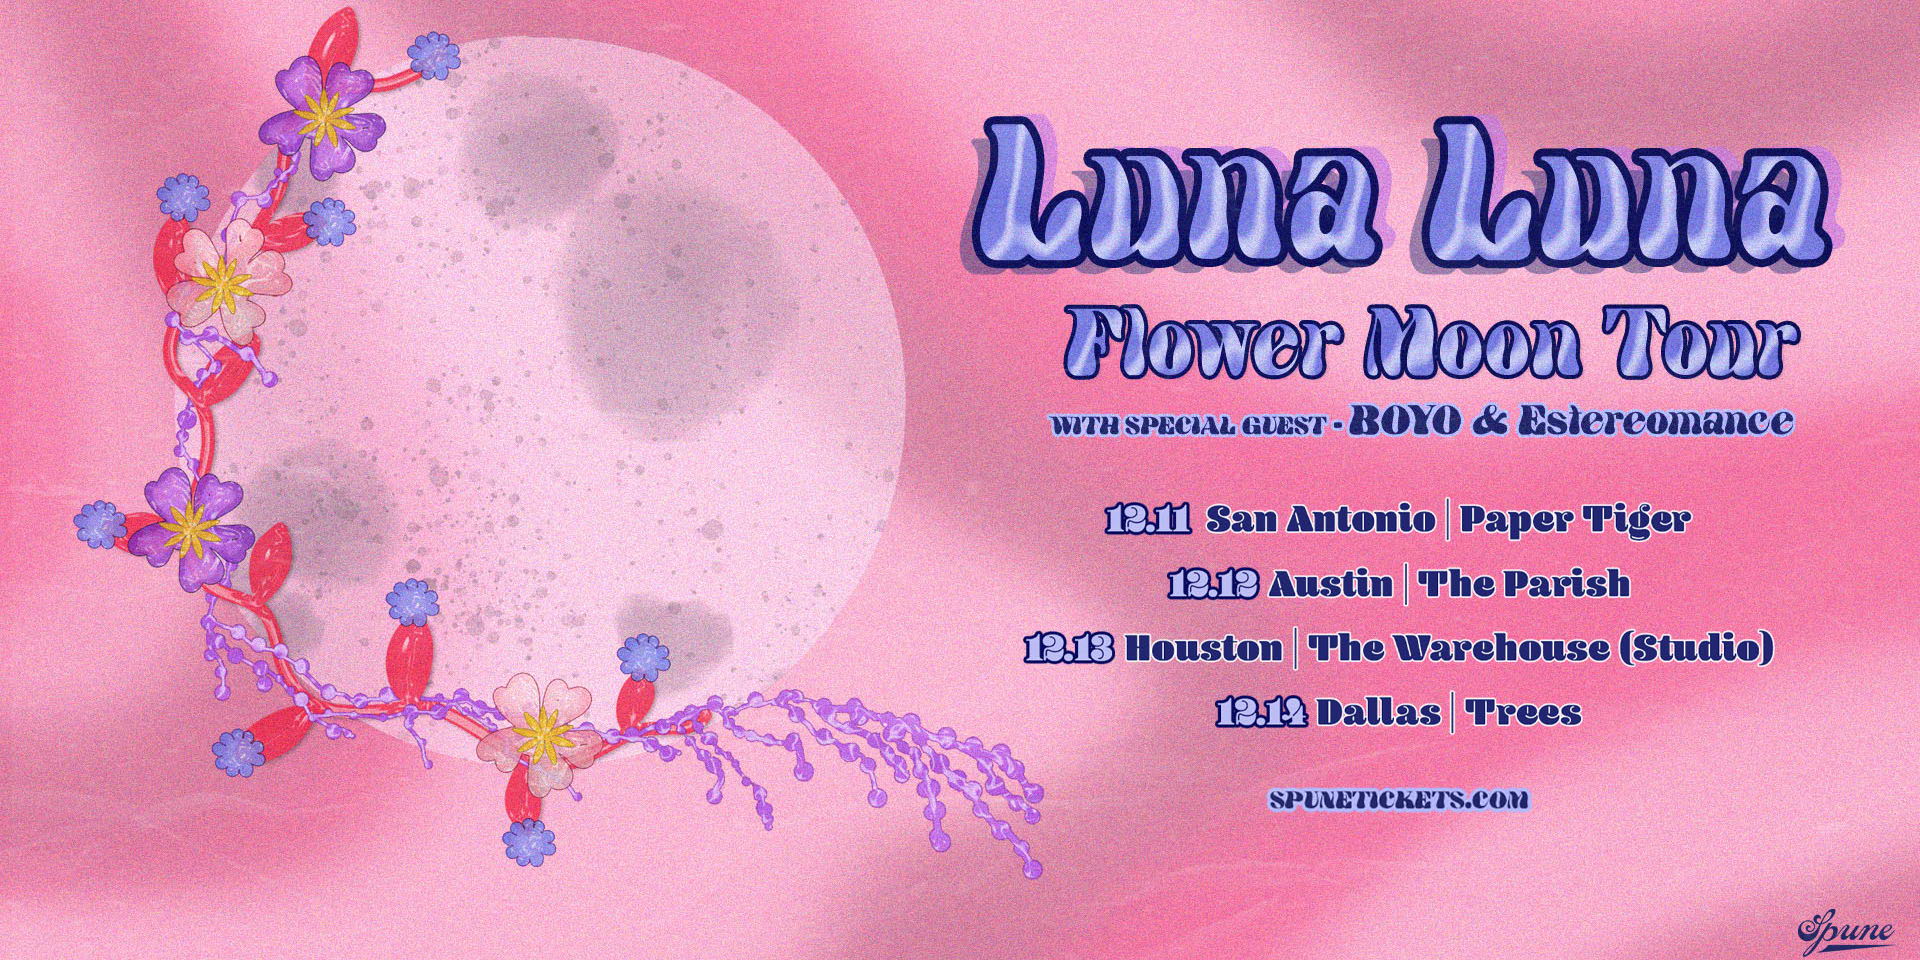 Luna Luna at The Parish 12/12 promotional image